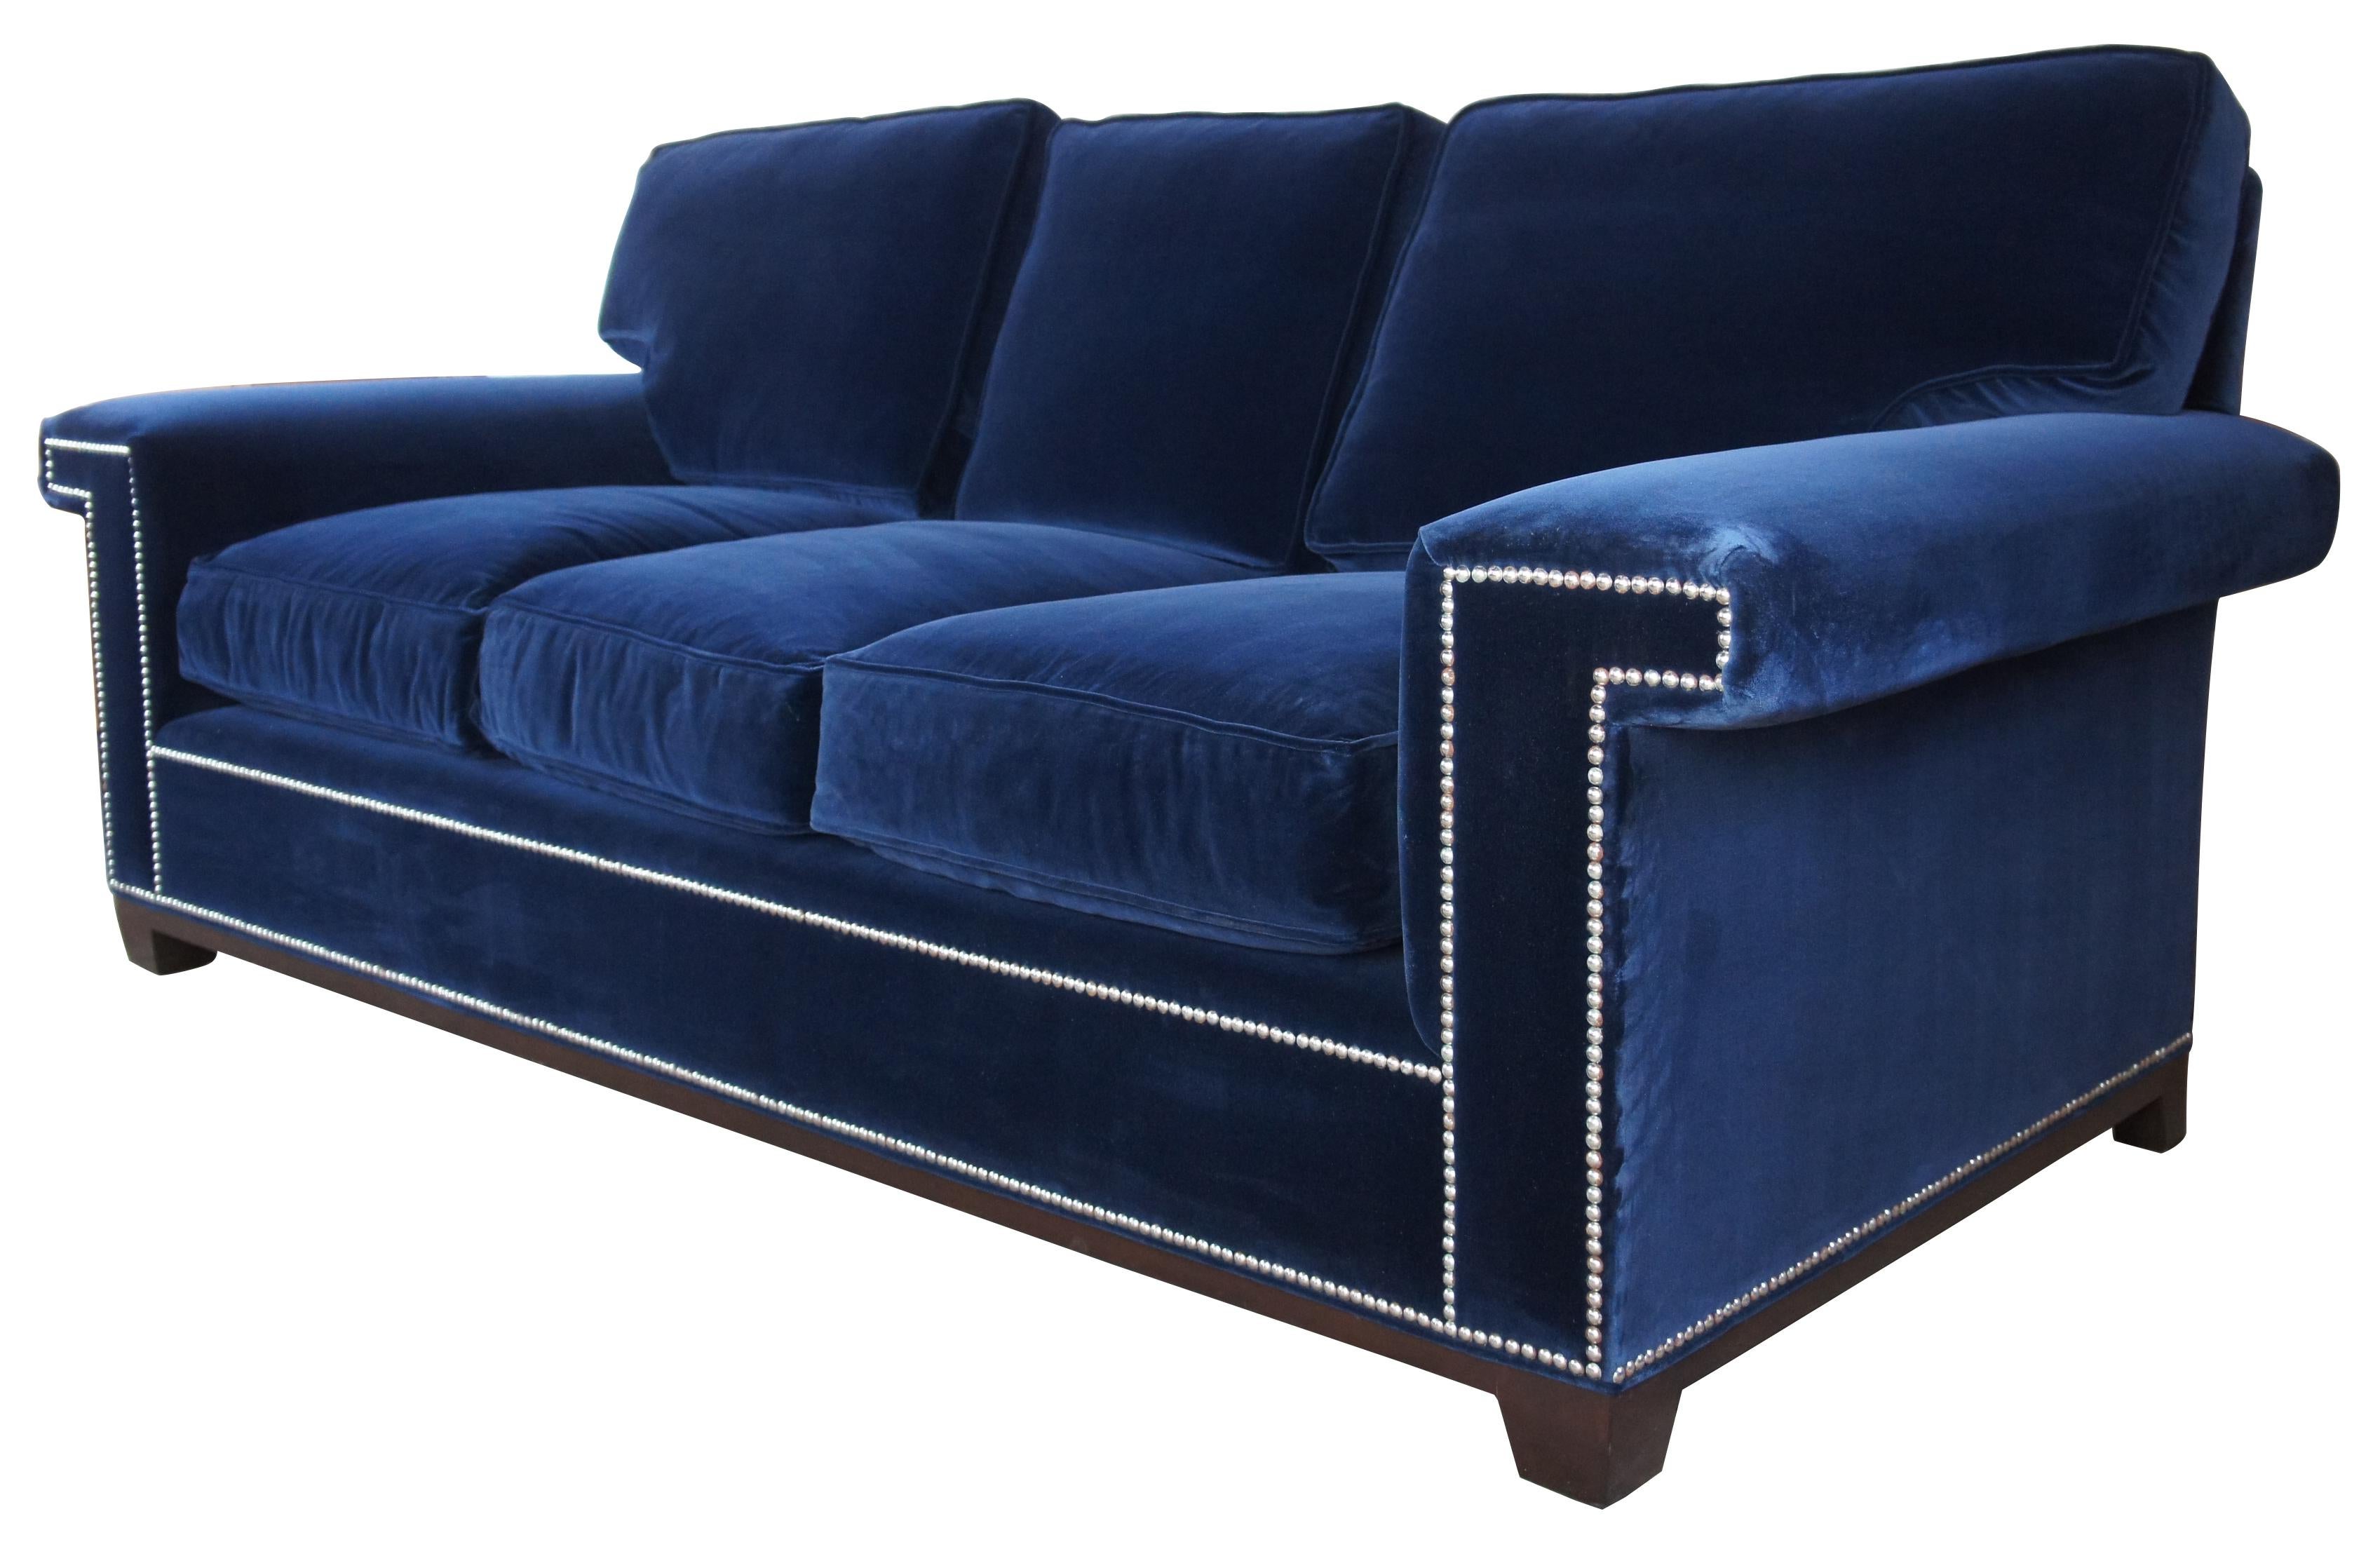 Barclay Butera interiors Paxton sofa modern blue velvet couch nailhead trim

Barclay Buteras Paxton sofa, upholstered in a blue velvet with silver nailhead trim over a bracketed base.